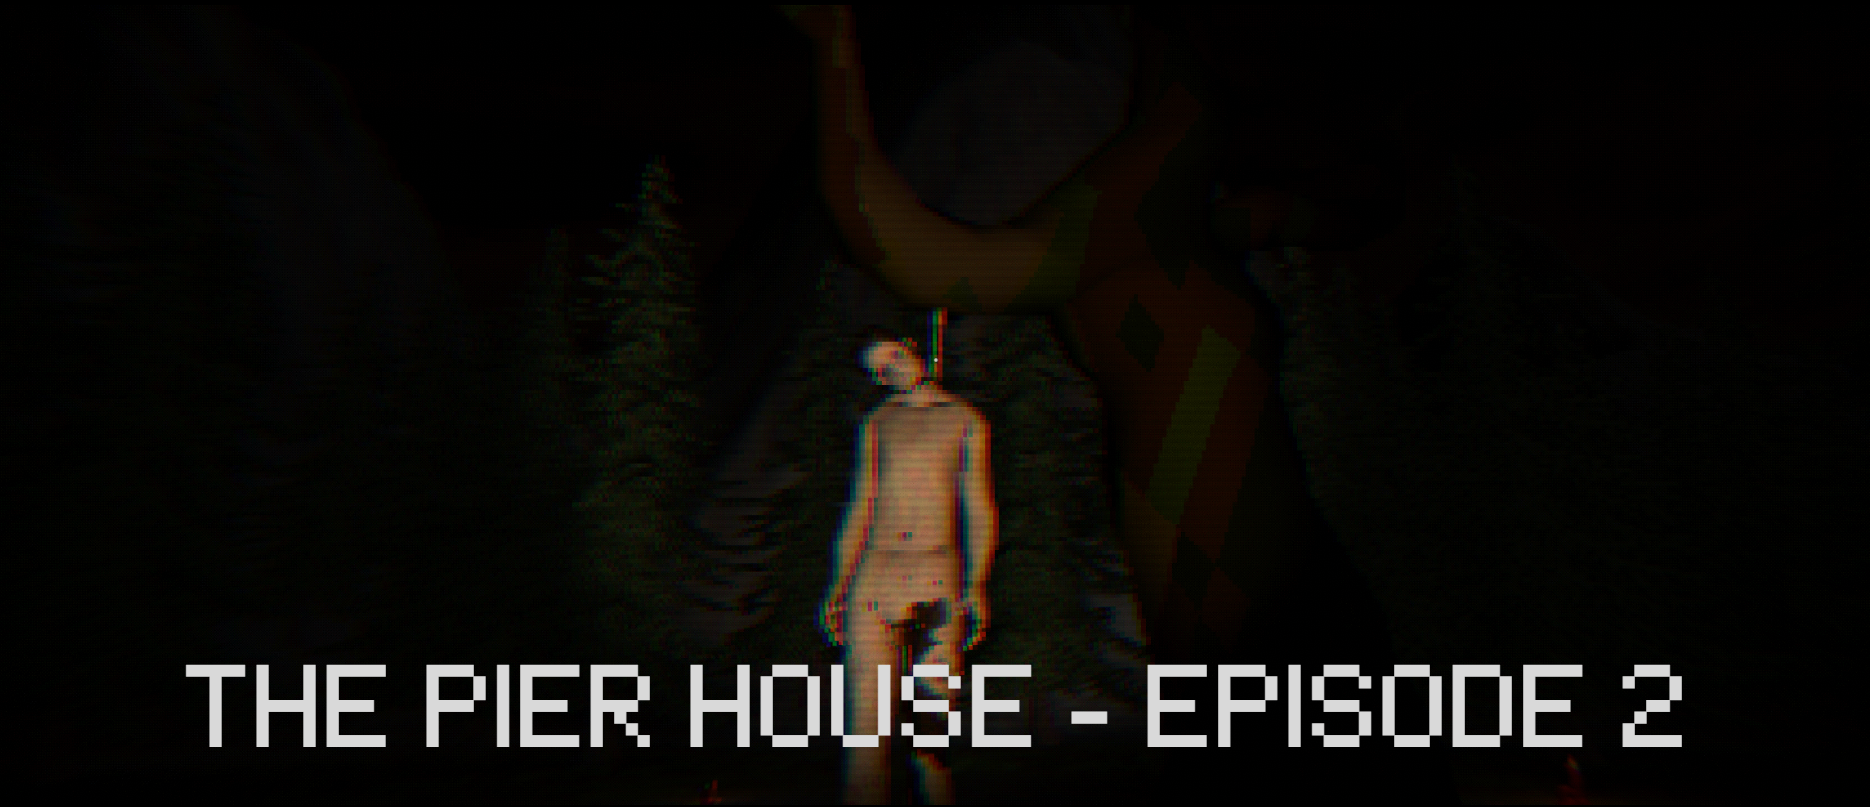 The Pier House - Episode 2